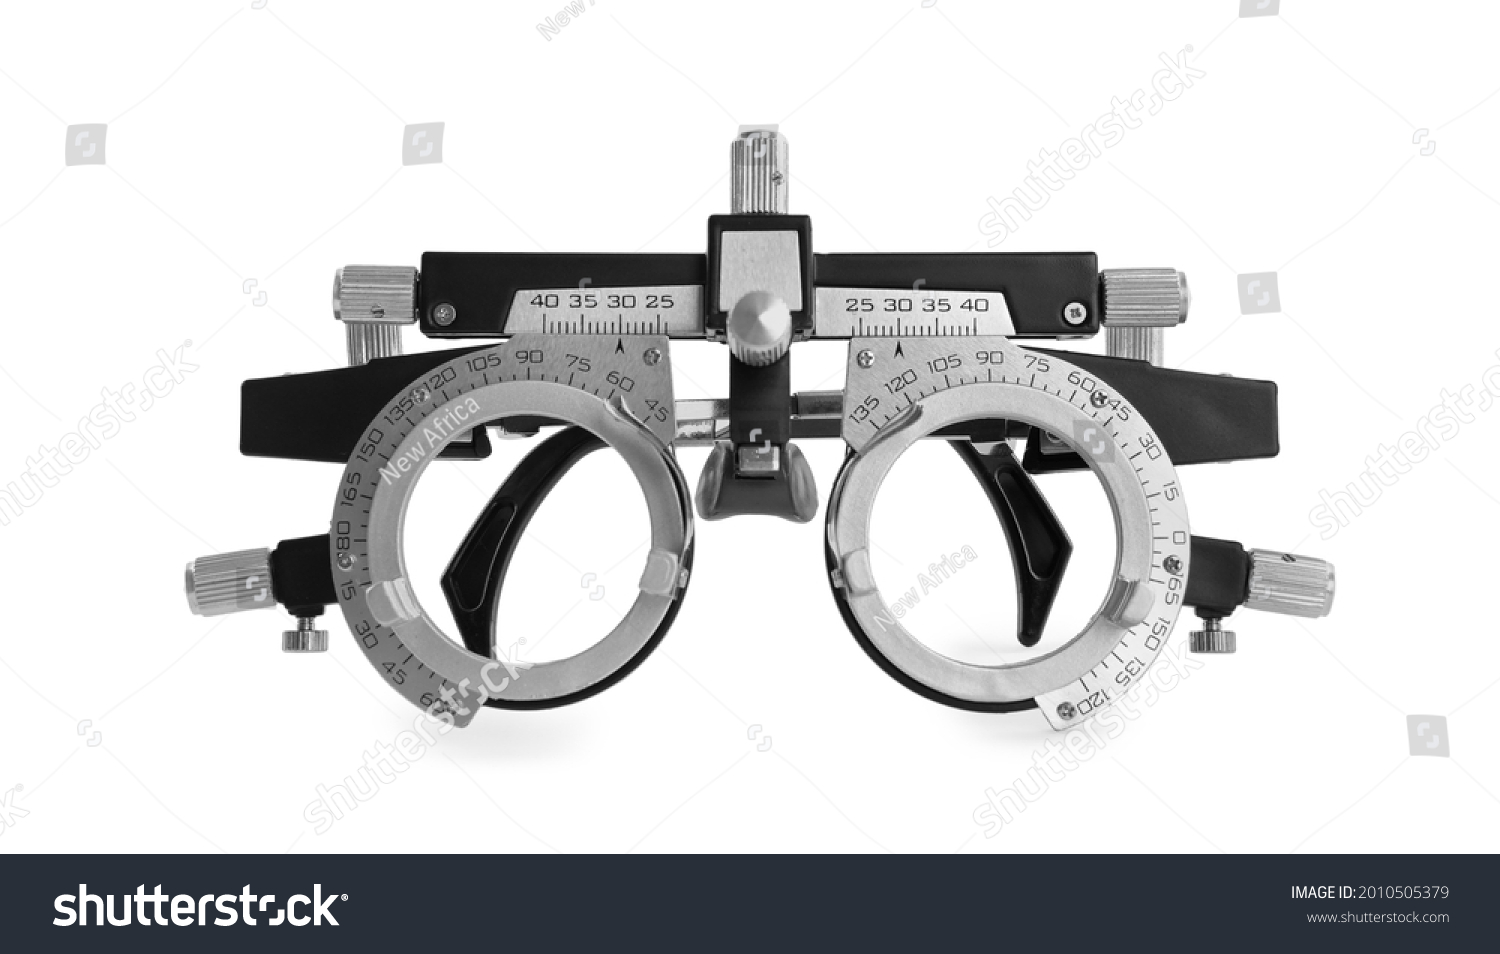 4,147 Optician tools Images, Stock Photos & Vectors | Shutterstock